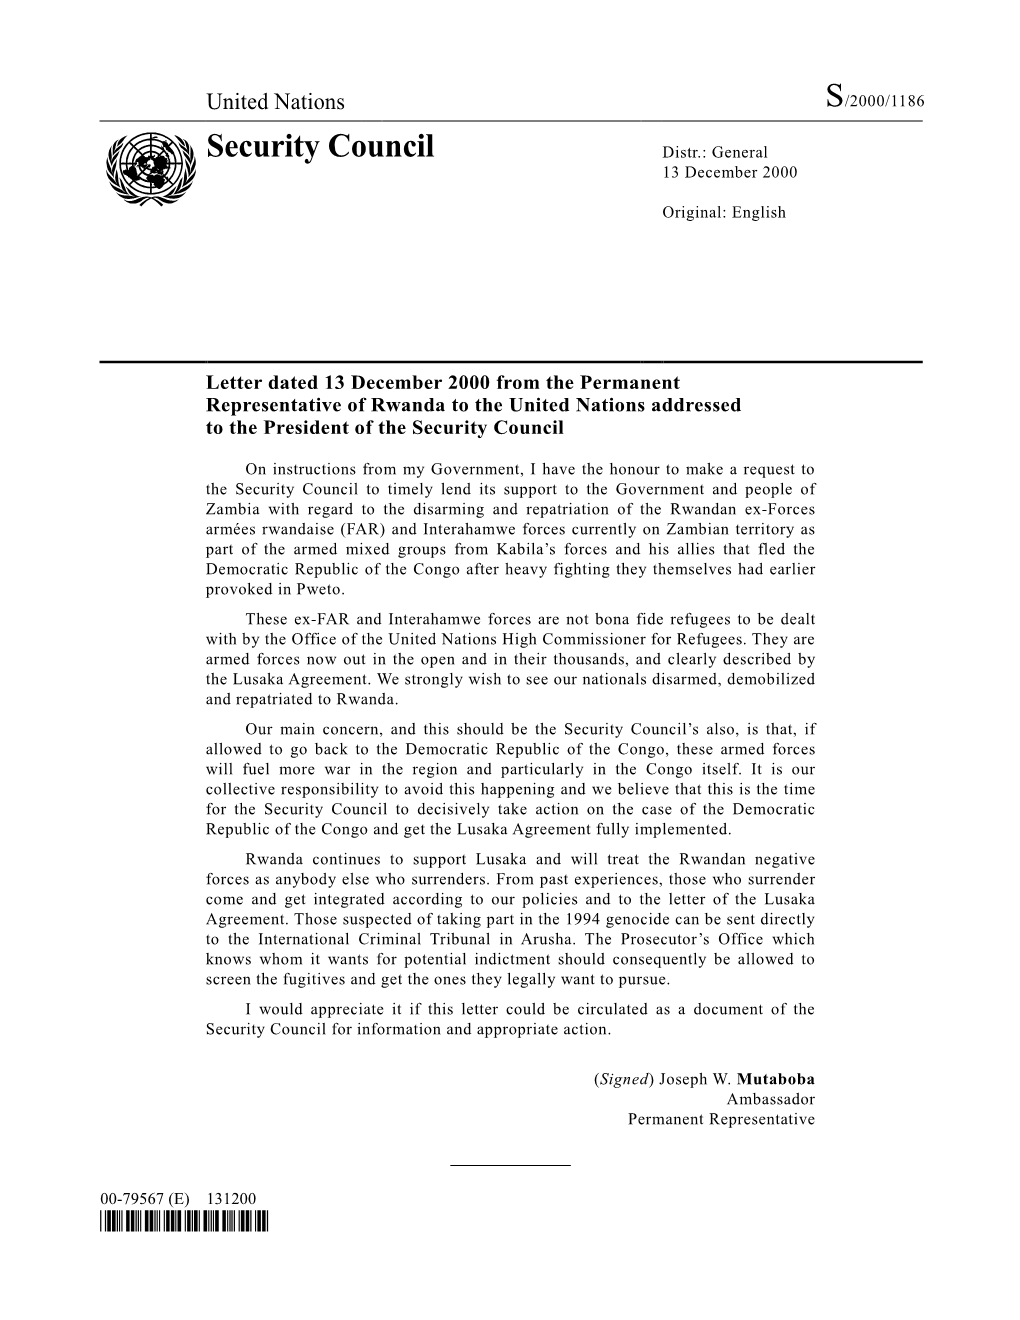 Security Council Distr.: General 13 December 2000